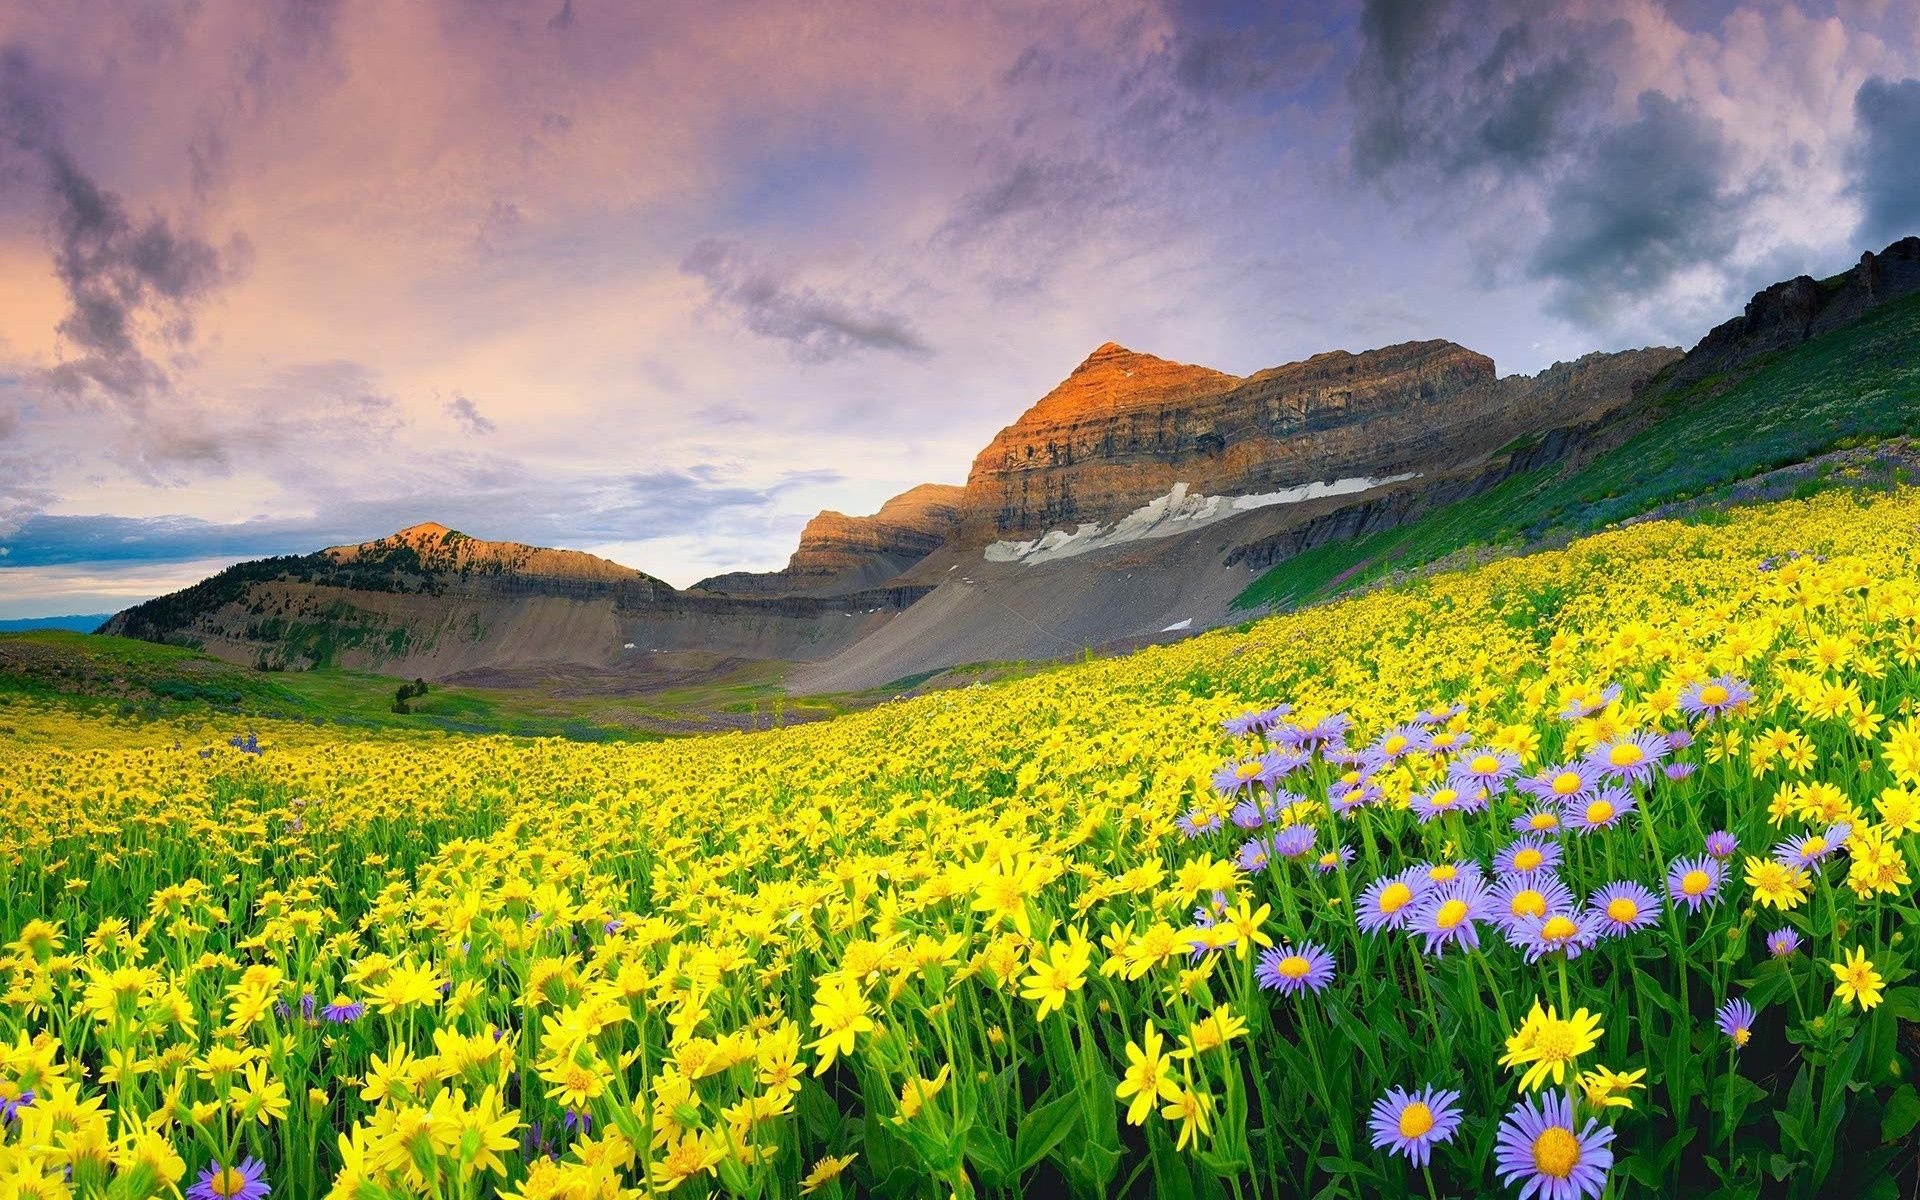 Field of Flowers Wallpaper. HD Beautiful Mountain Valley Of